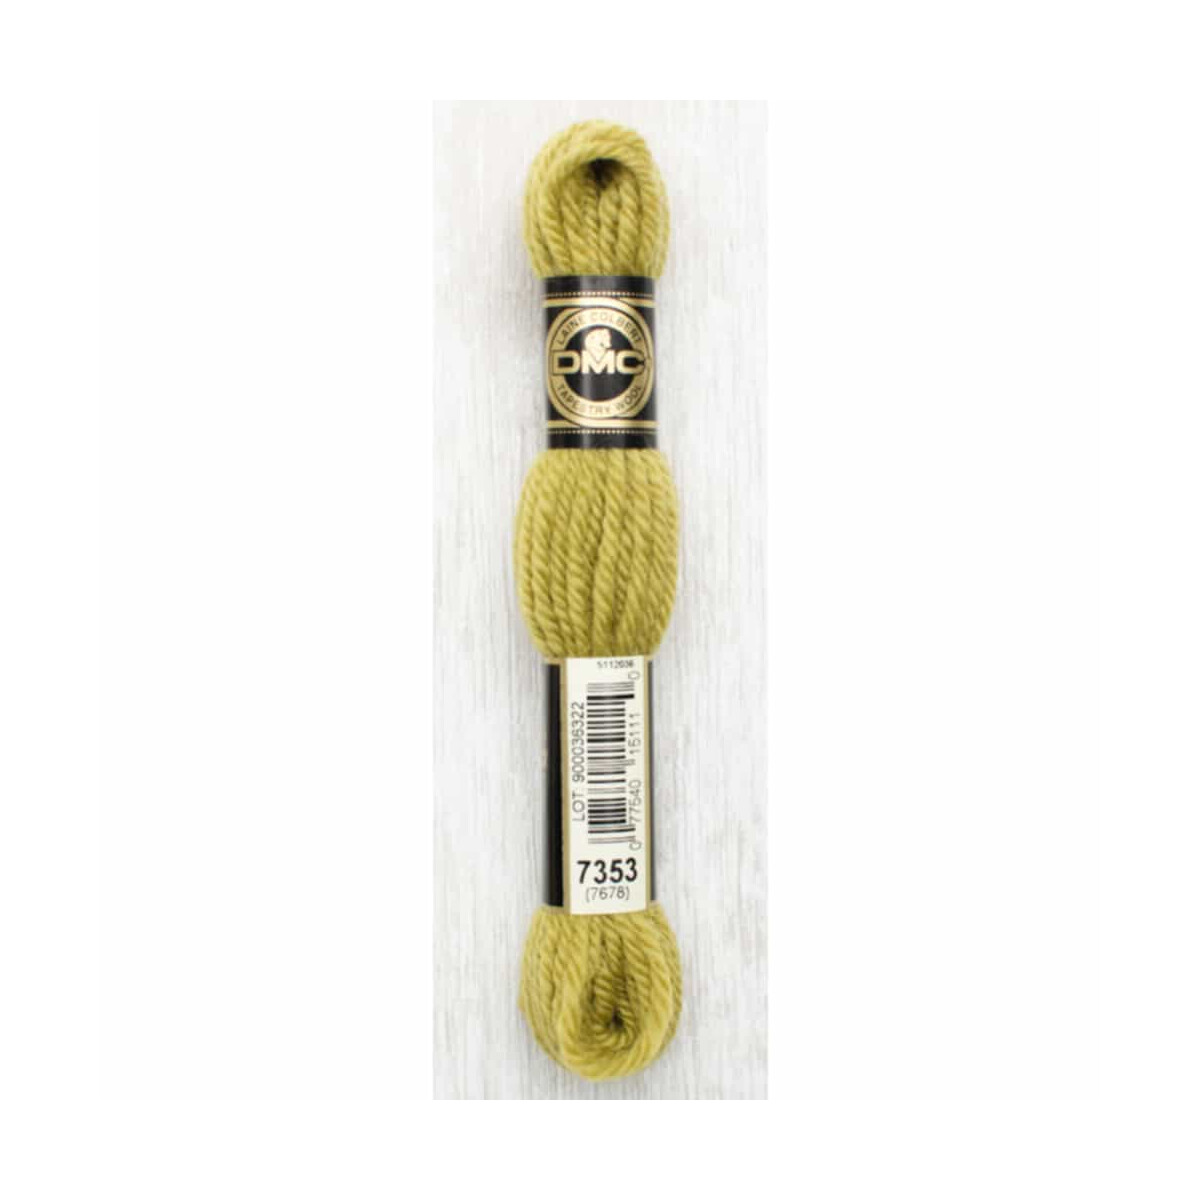 DMC Laine Colbert wool, 8m, 486-7353